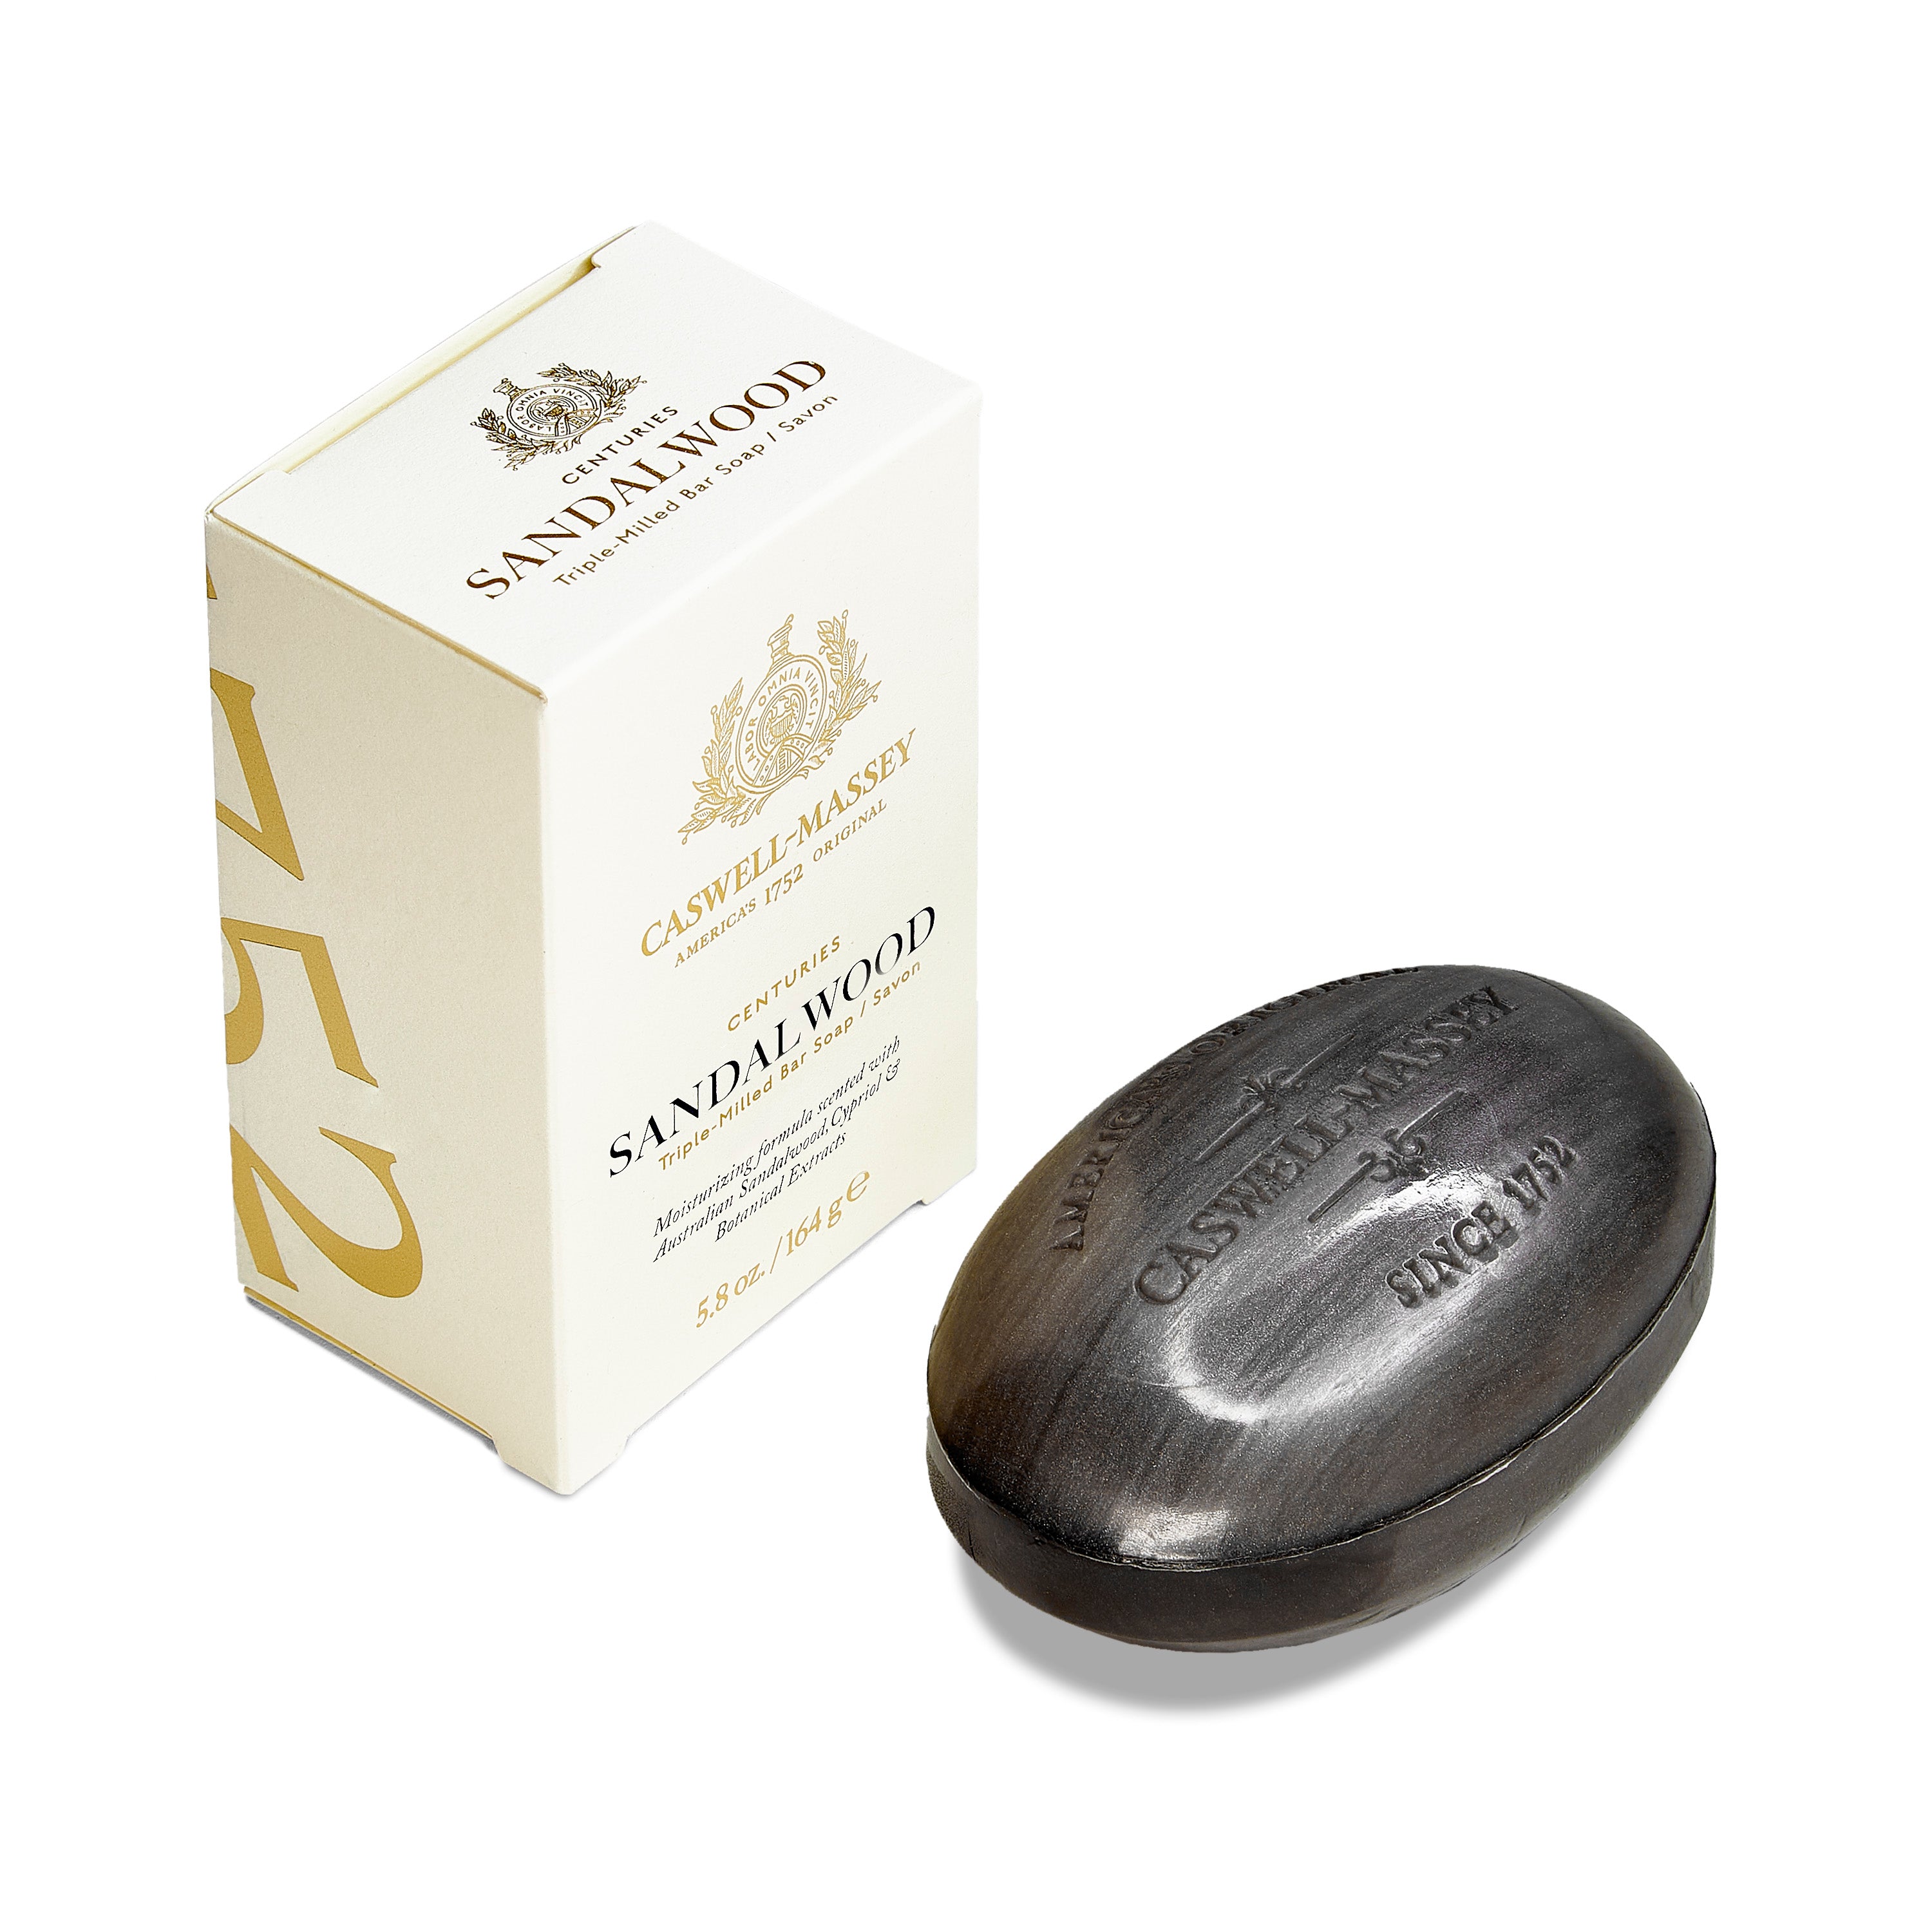 Caswell-Massey® Centuries Sandalwood Bar Soap shown next to cream box